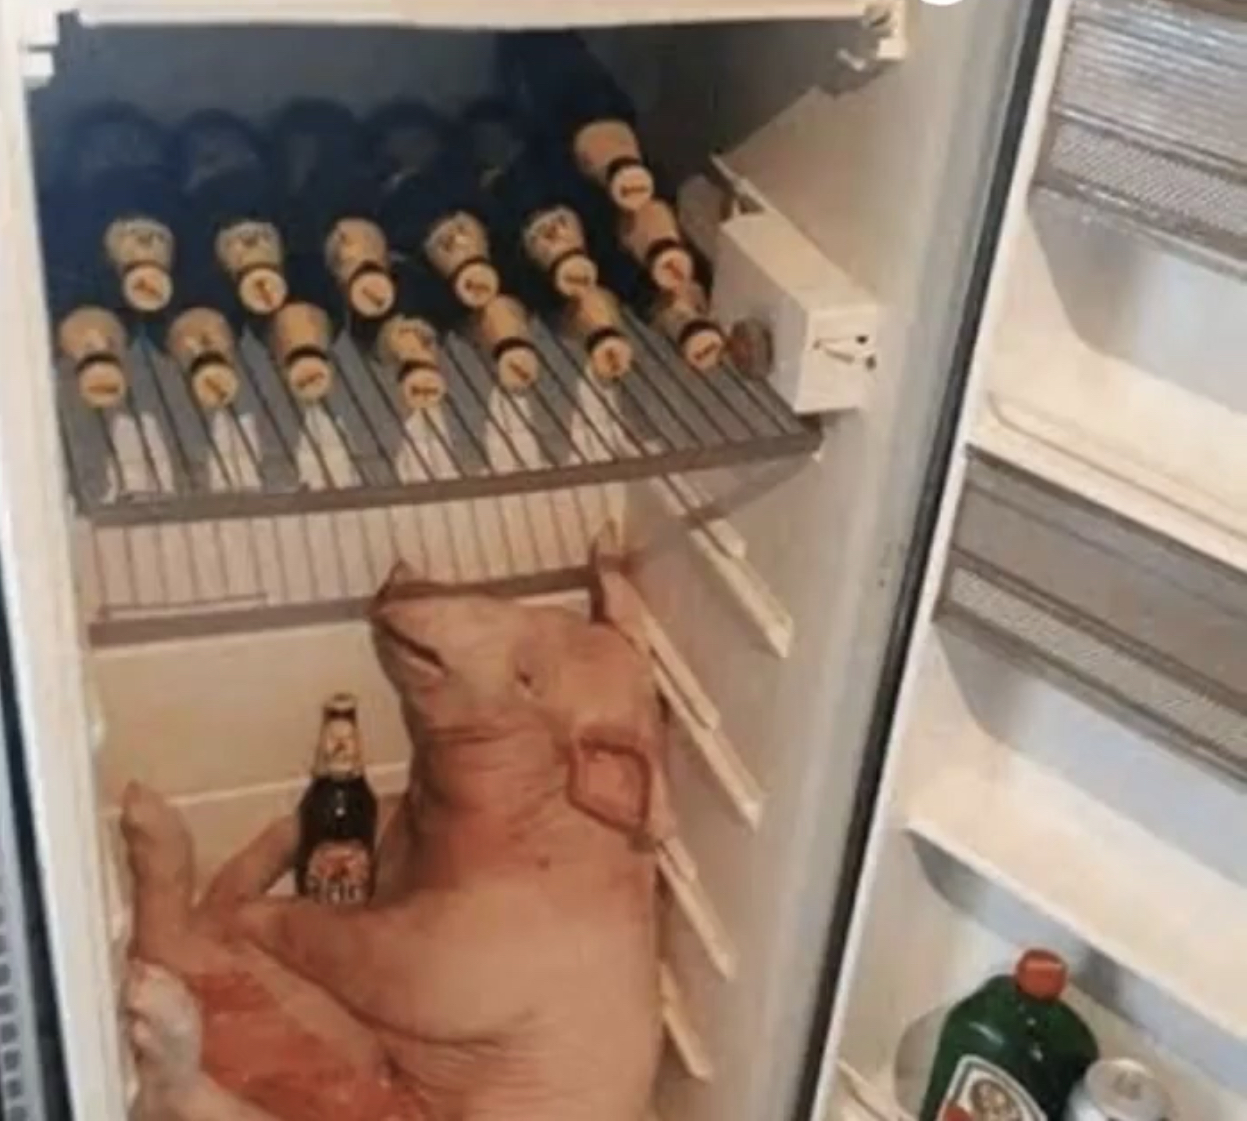 Pig in fridge Blank Meme Template